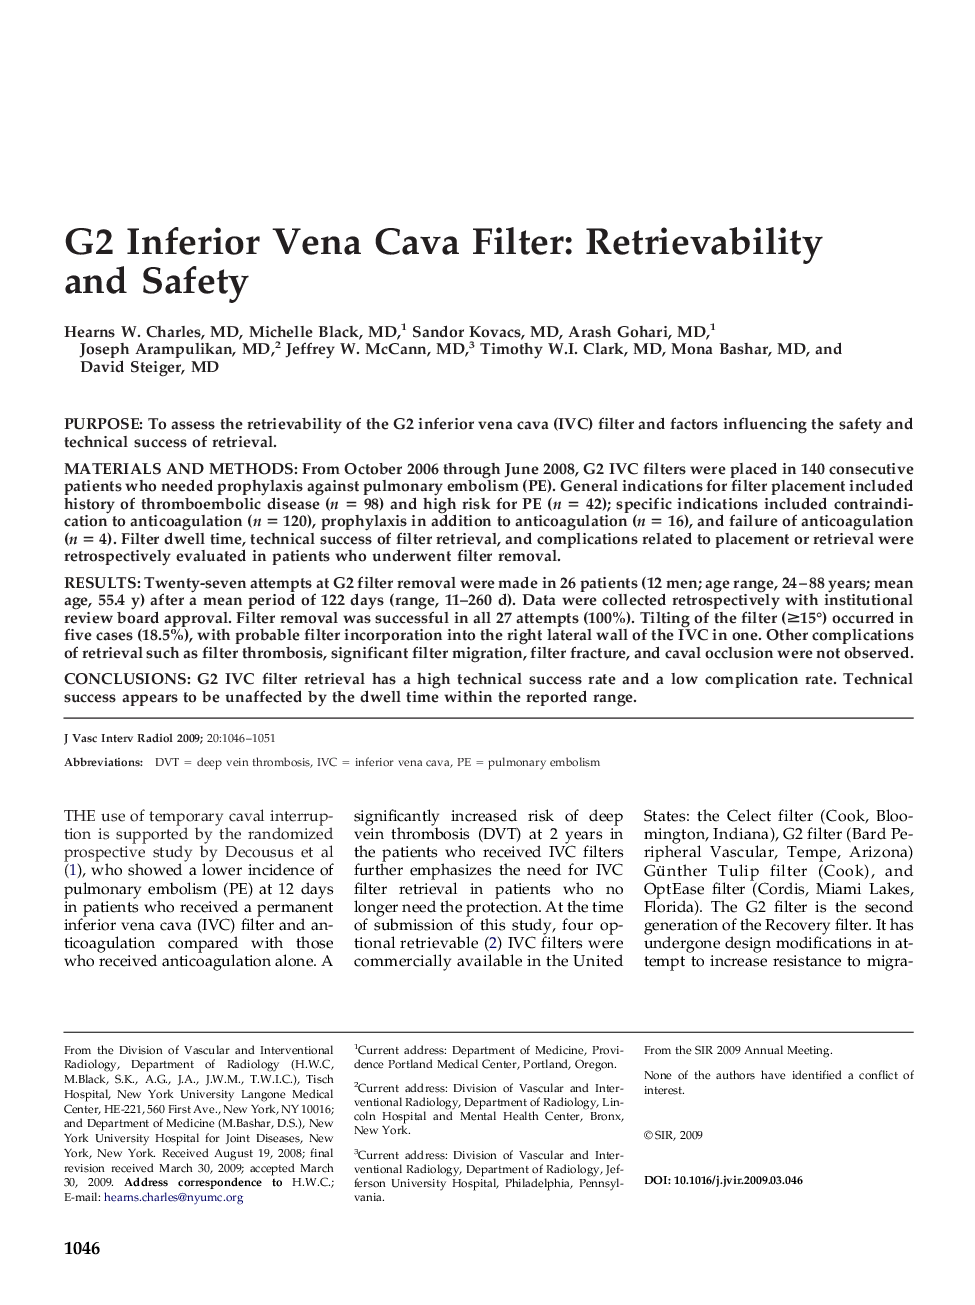 G2 Inferior Vena Cava Filter: Retrievability and Safety